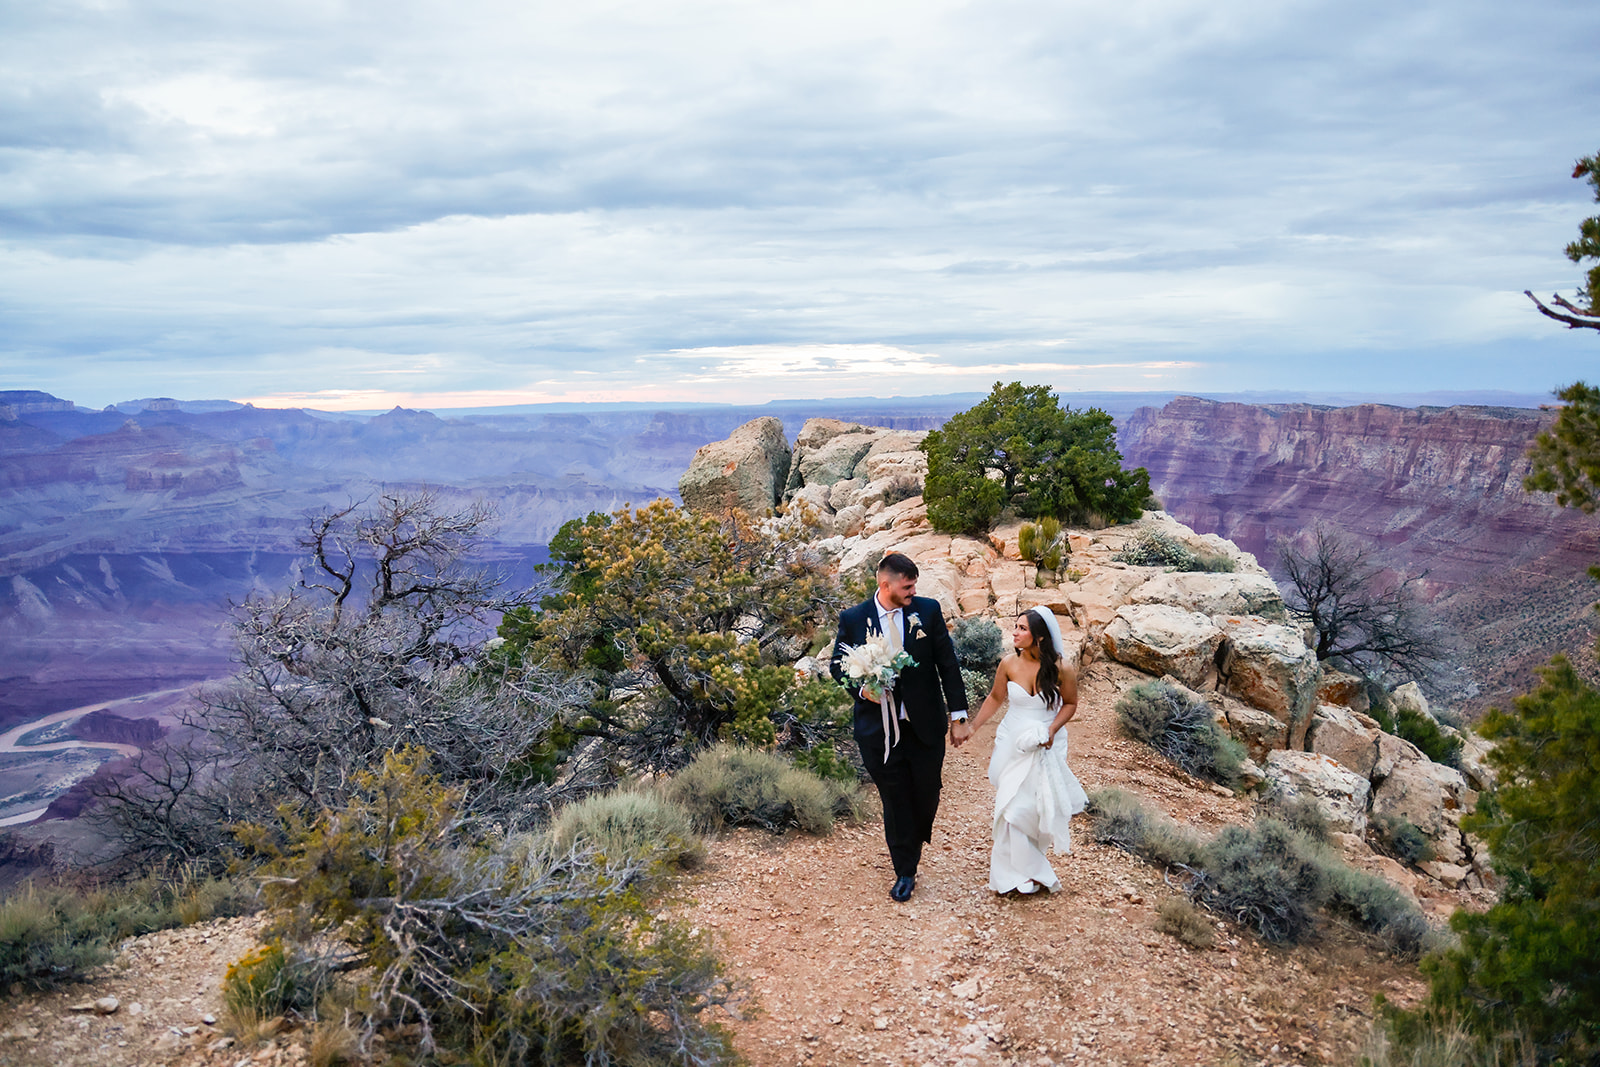 Grand Canyon Arizona romantic destination wedding. Hiking adventure wedding photographers